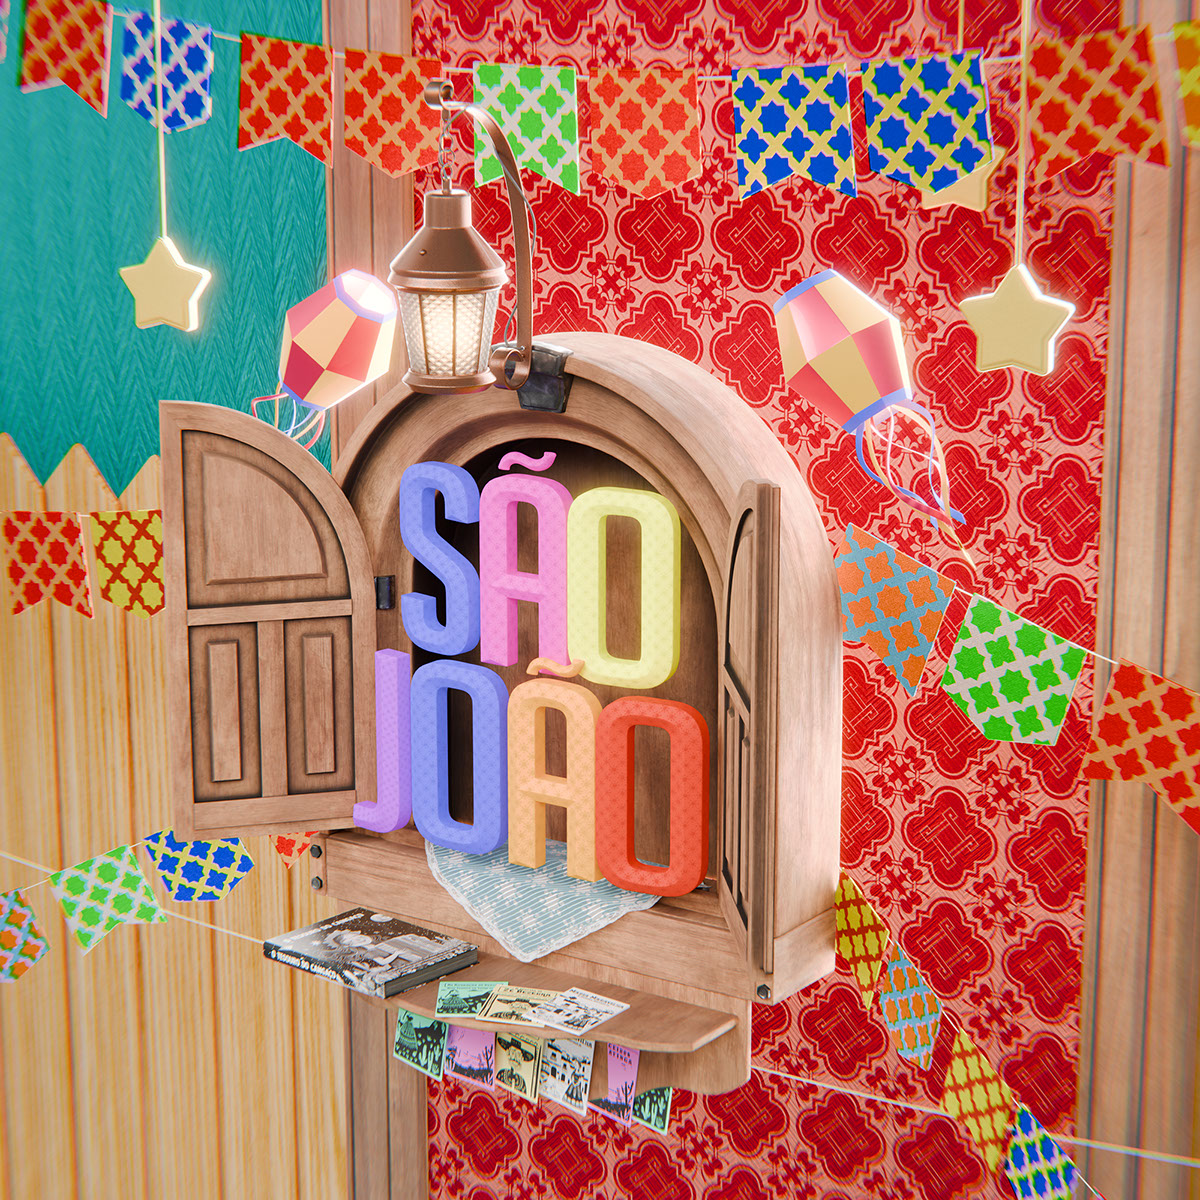 Selo 3D Sao Joao rendition image